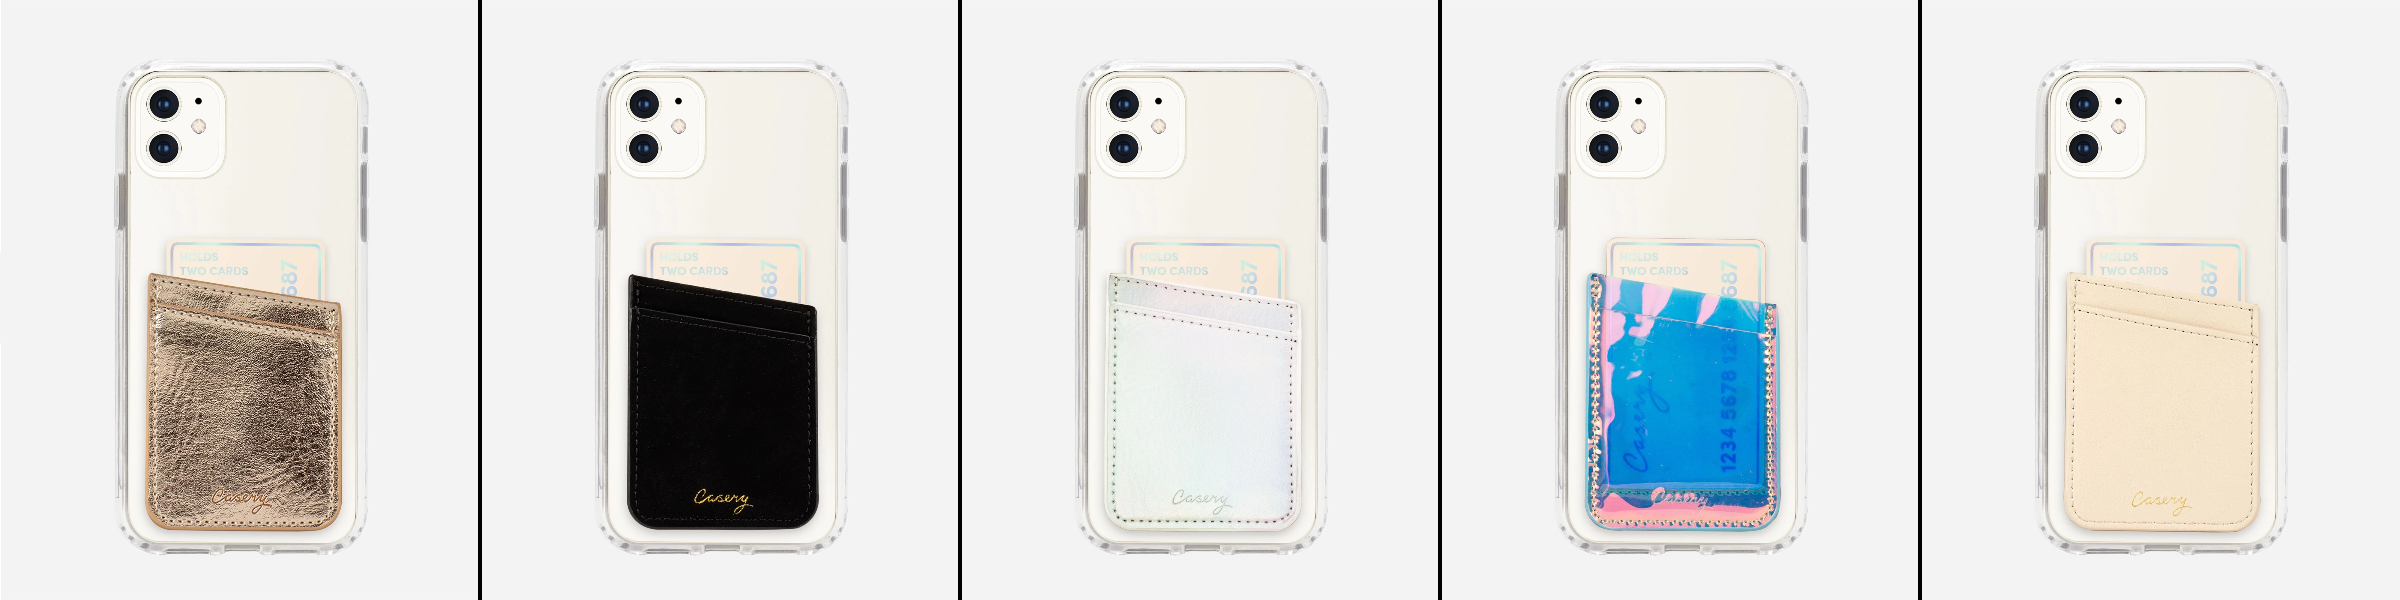 Casery Adhesive Phone Pocket Models